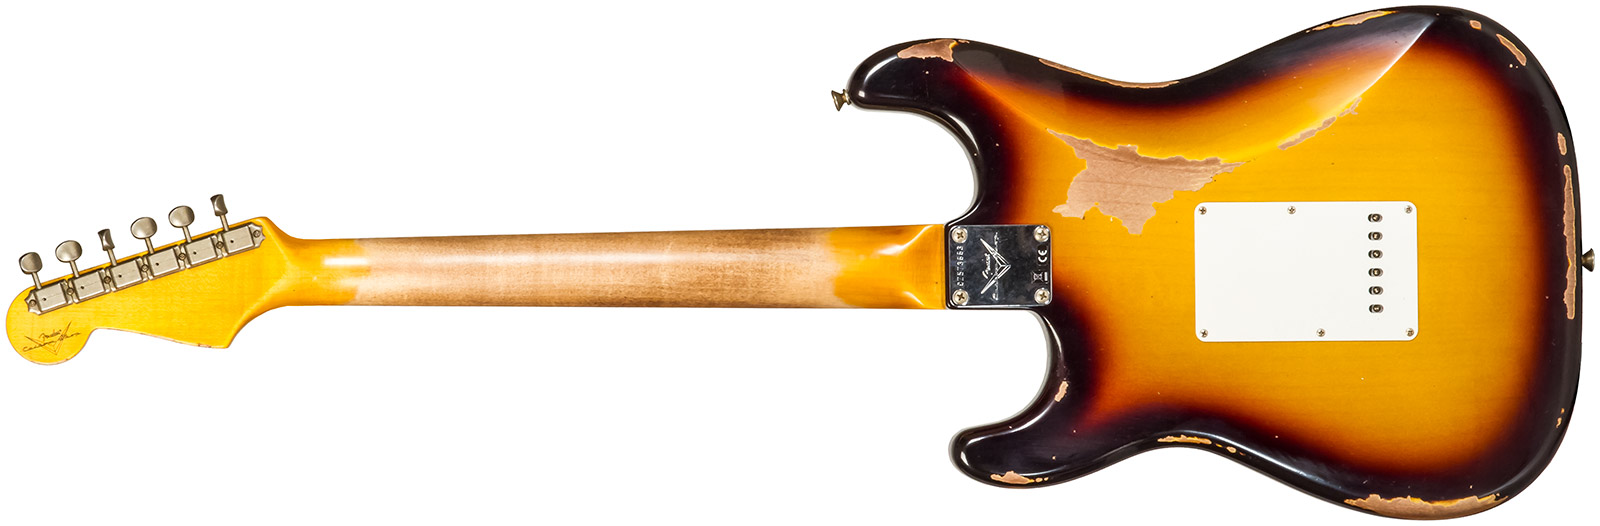 Fender Custom Shop Strat 1961 3s Trem Rw #cz573663 - Heavy Relic Aged 3-color Sunburst - Str shape electric guitar - Variation 1